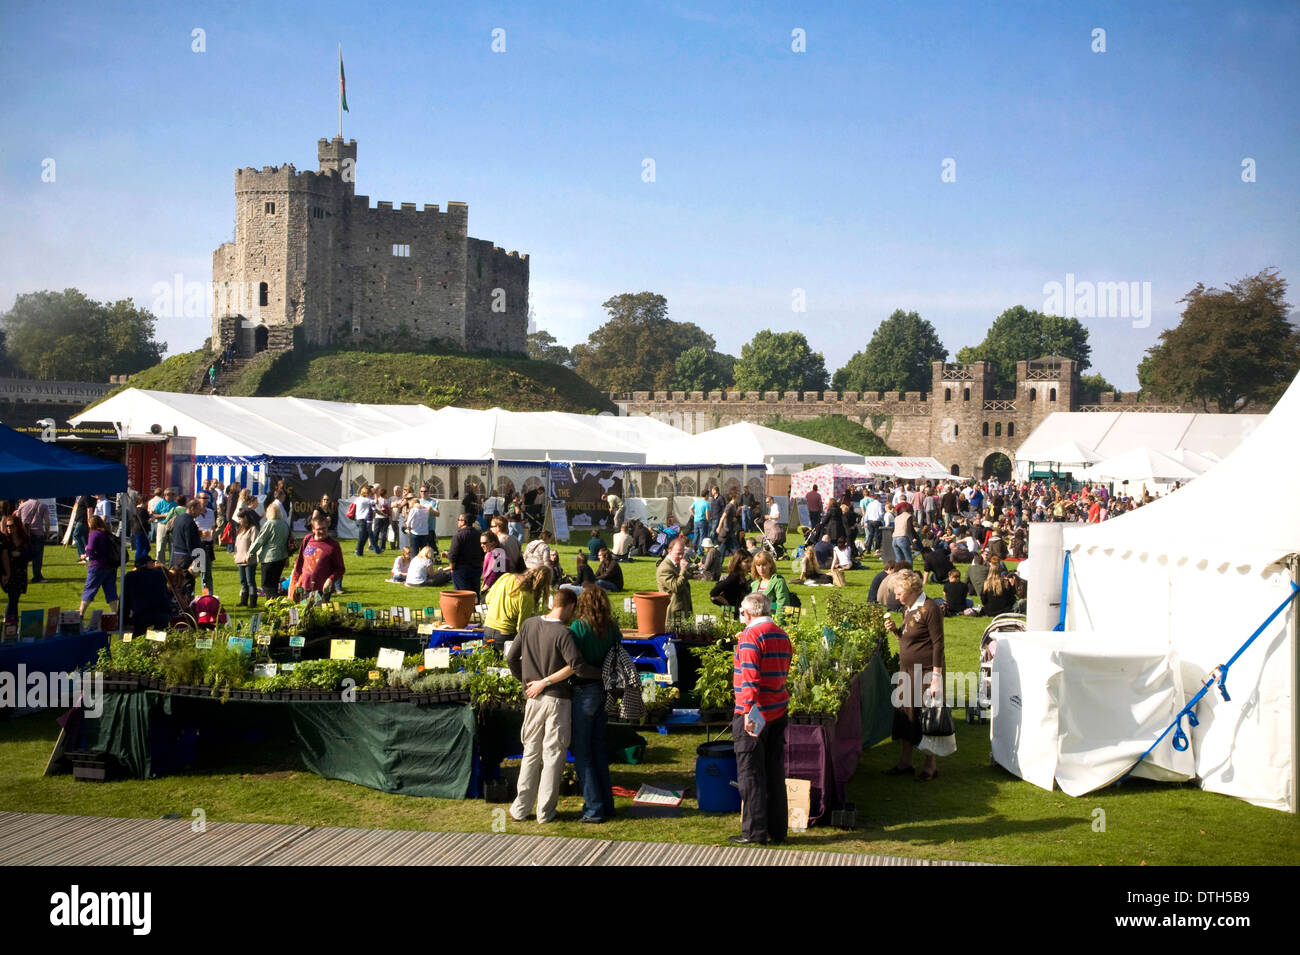 Der great British Cheese Festival, Cardiff Castle. Stockfoto